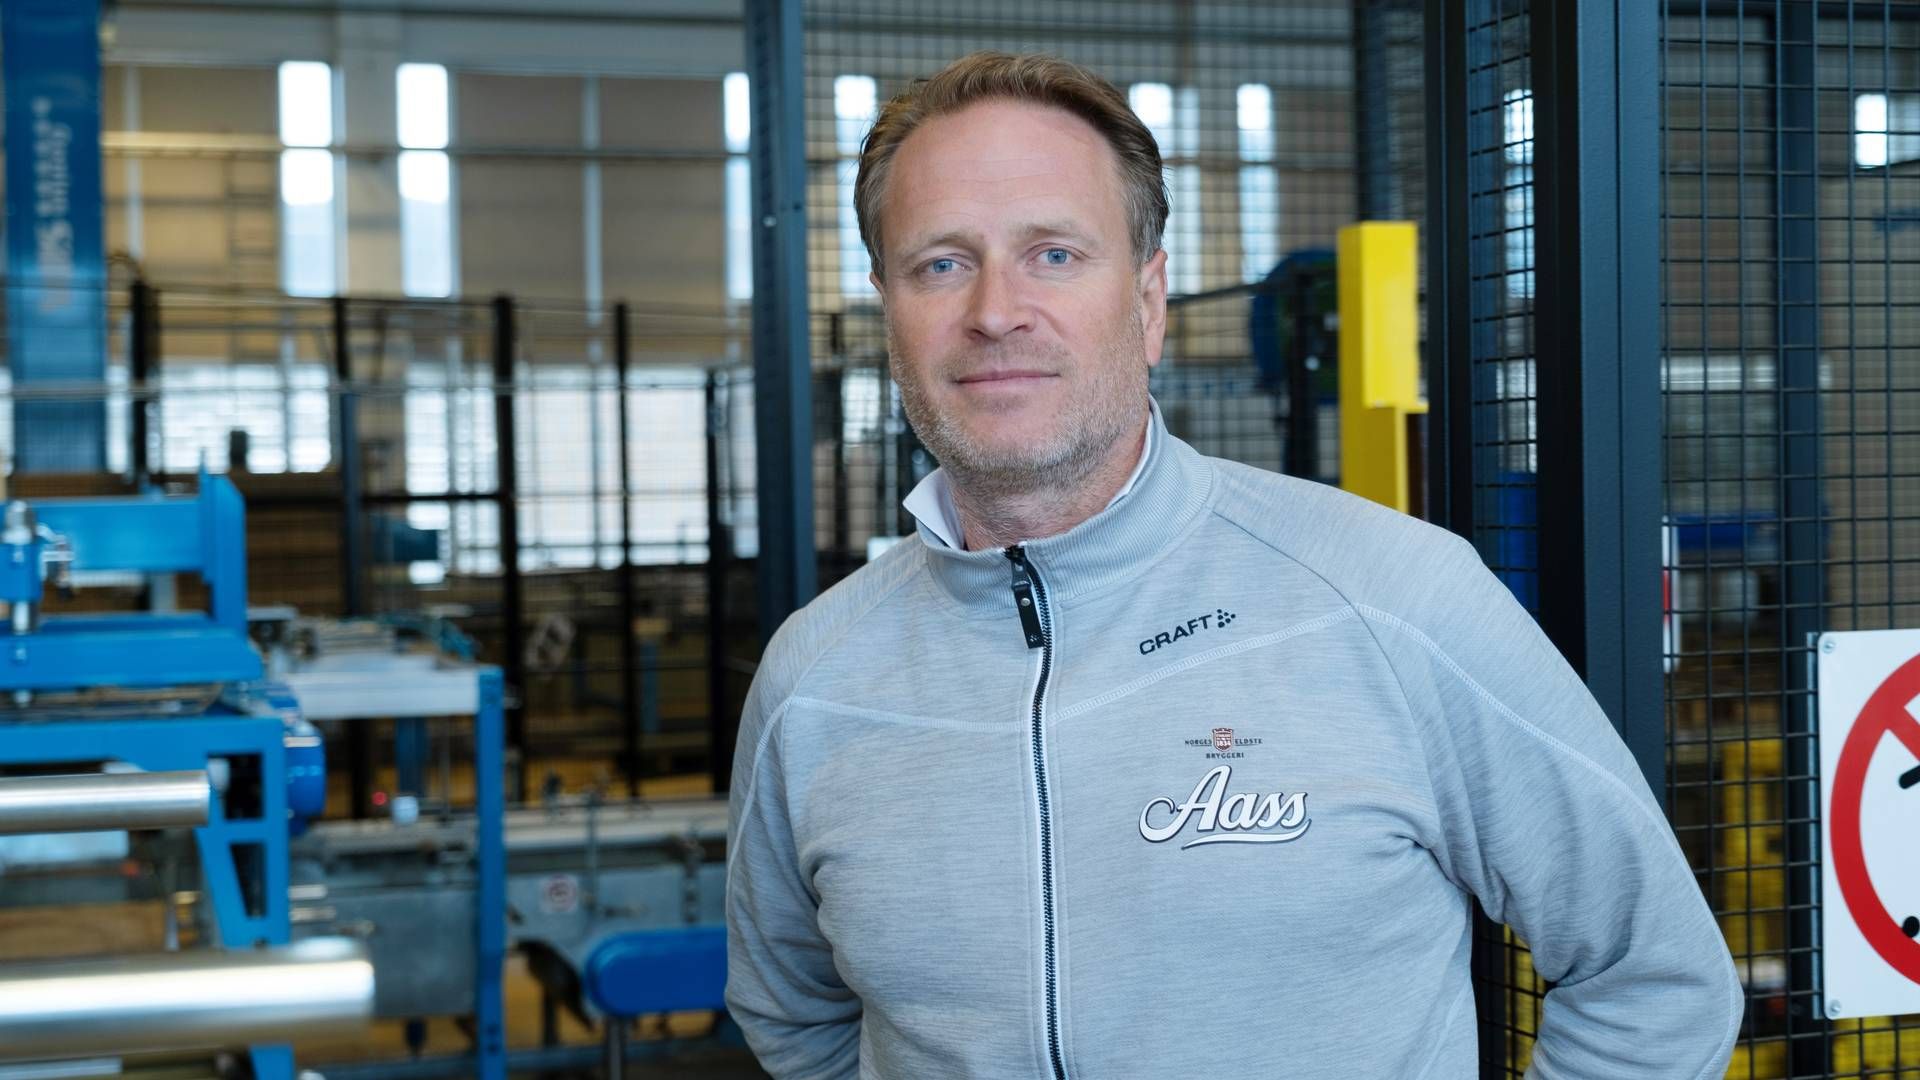 Administrerende direktør i Aass Bryggeri, Christian Aass, kan smile for at bryggeriet nådde milliardomsetning i 2023. | Foto: Anders Hustveit Gerhardsen